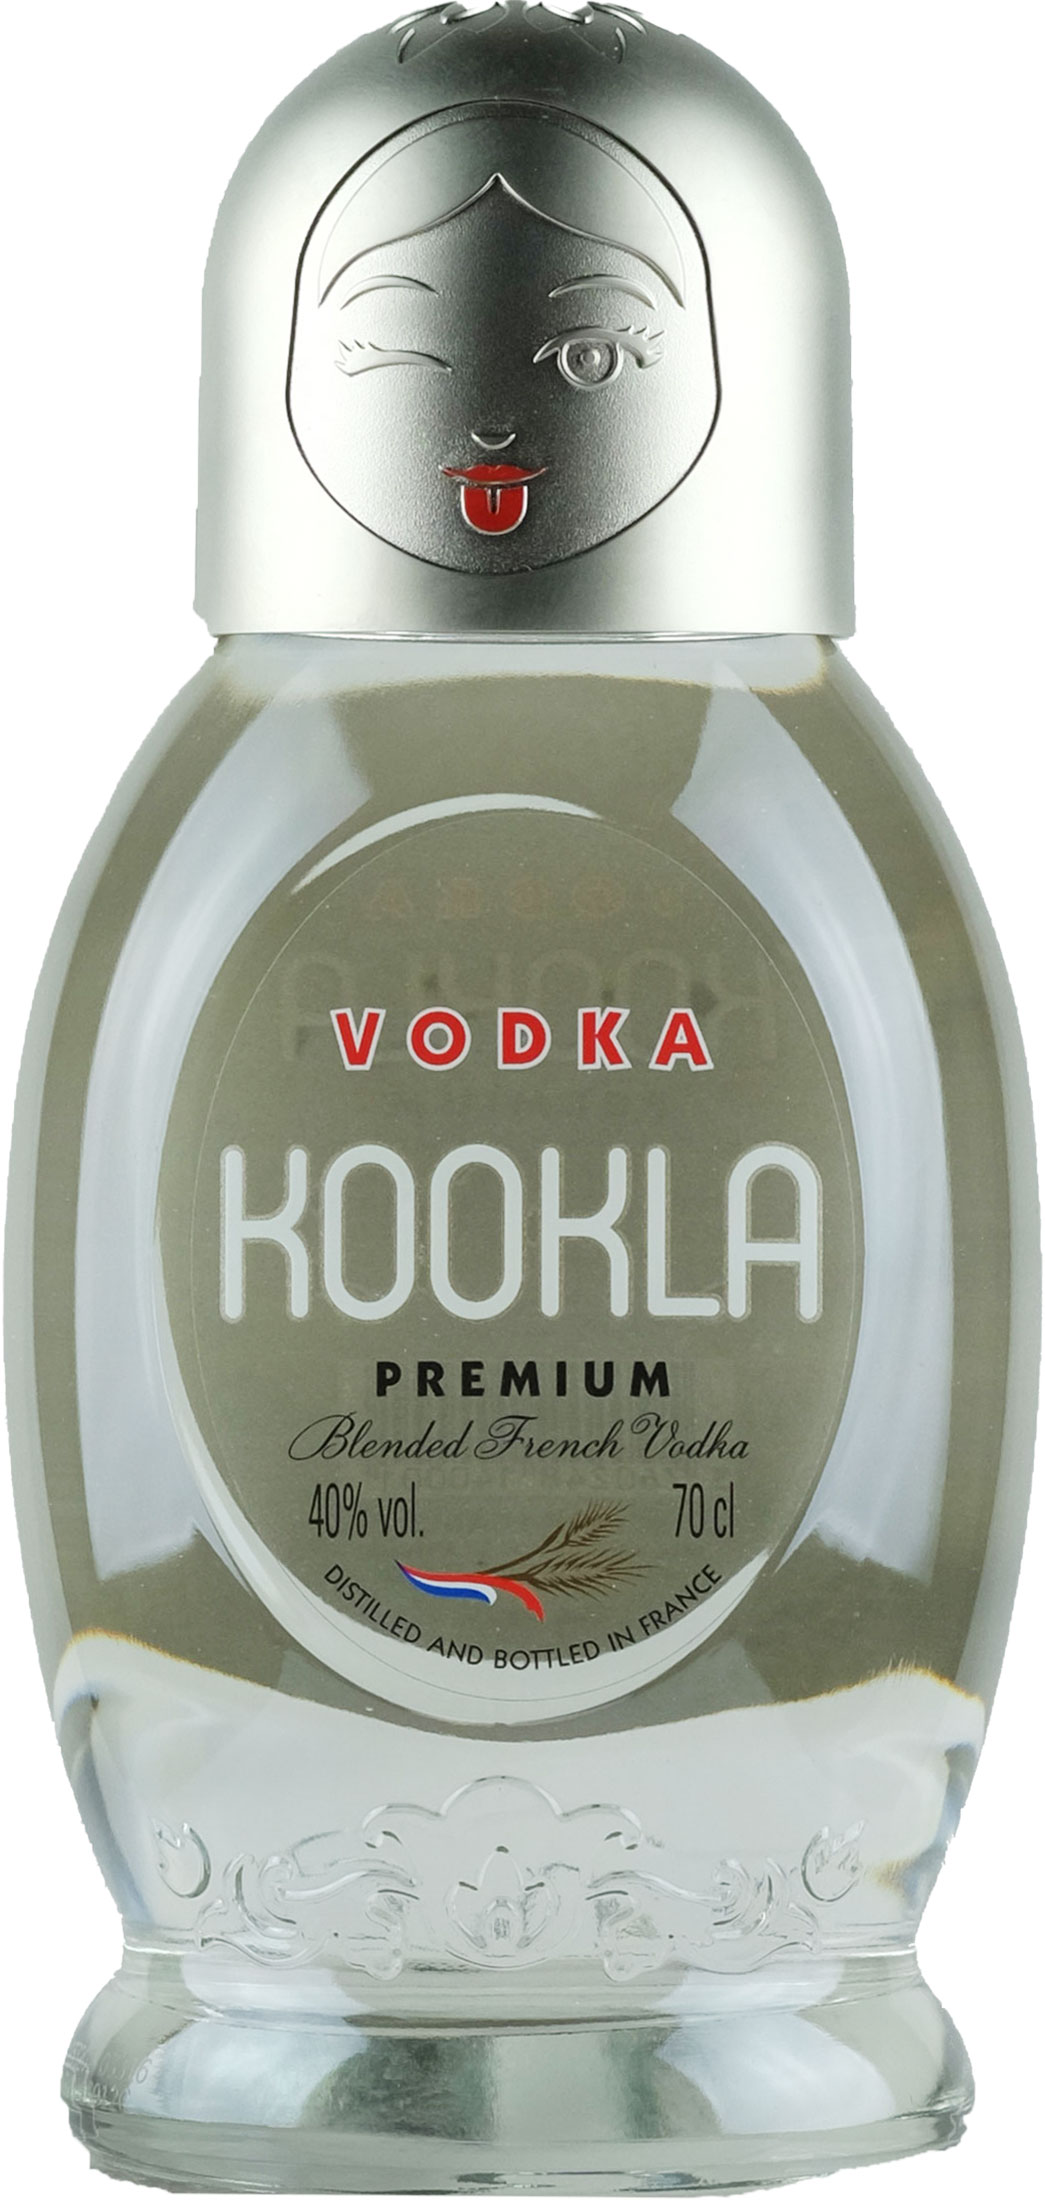 Kookla Vodka 40°